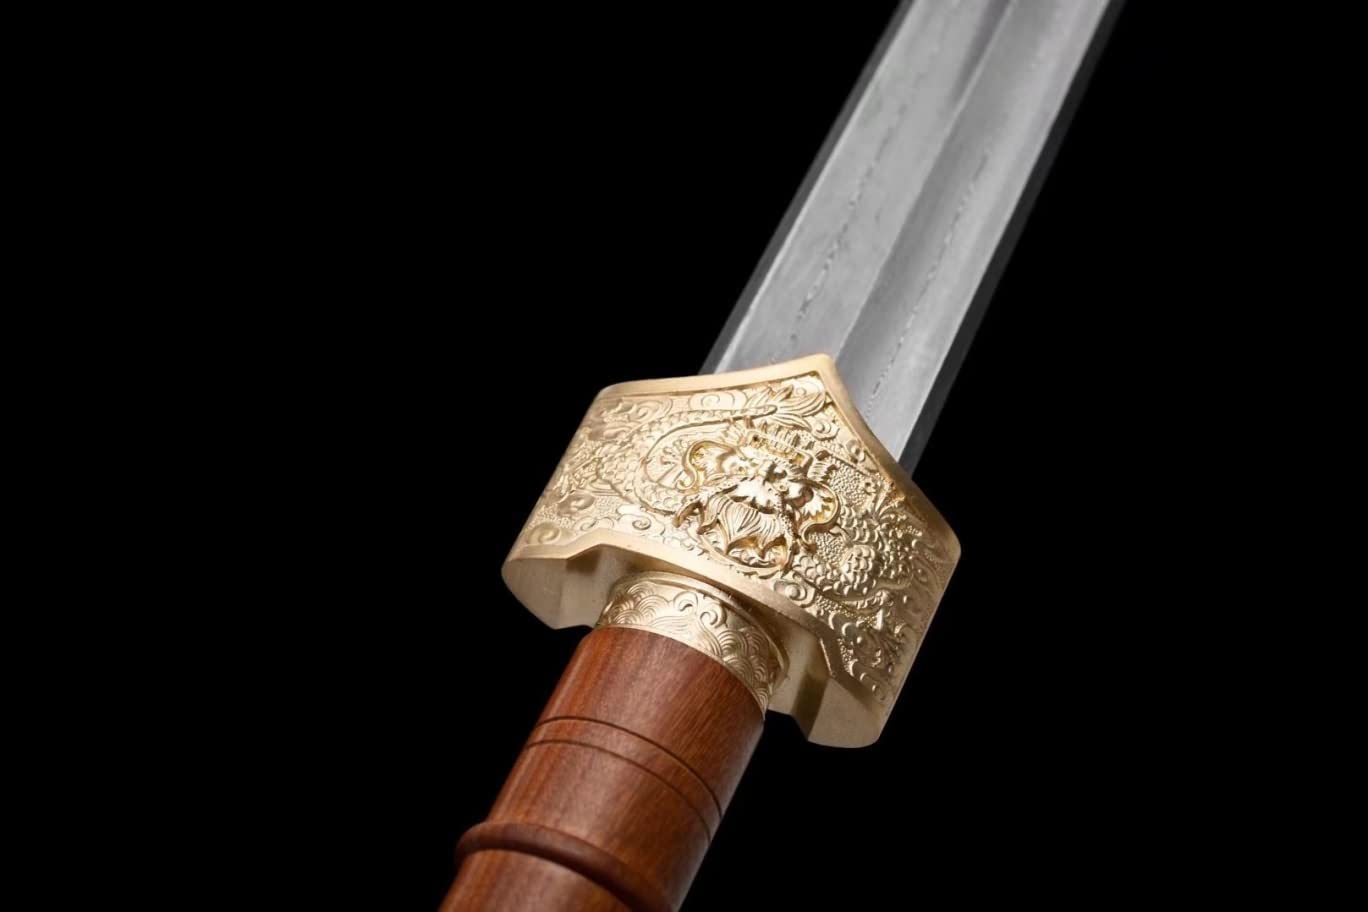 Yuewang Sword,Damascus Steel Blades,Brass Fittings,Redwood Scabbard